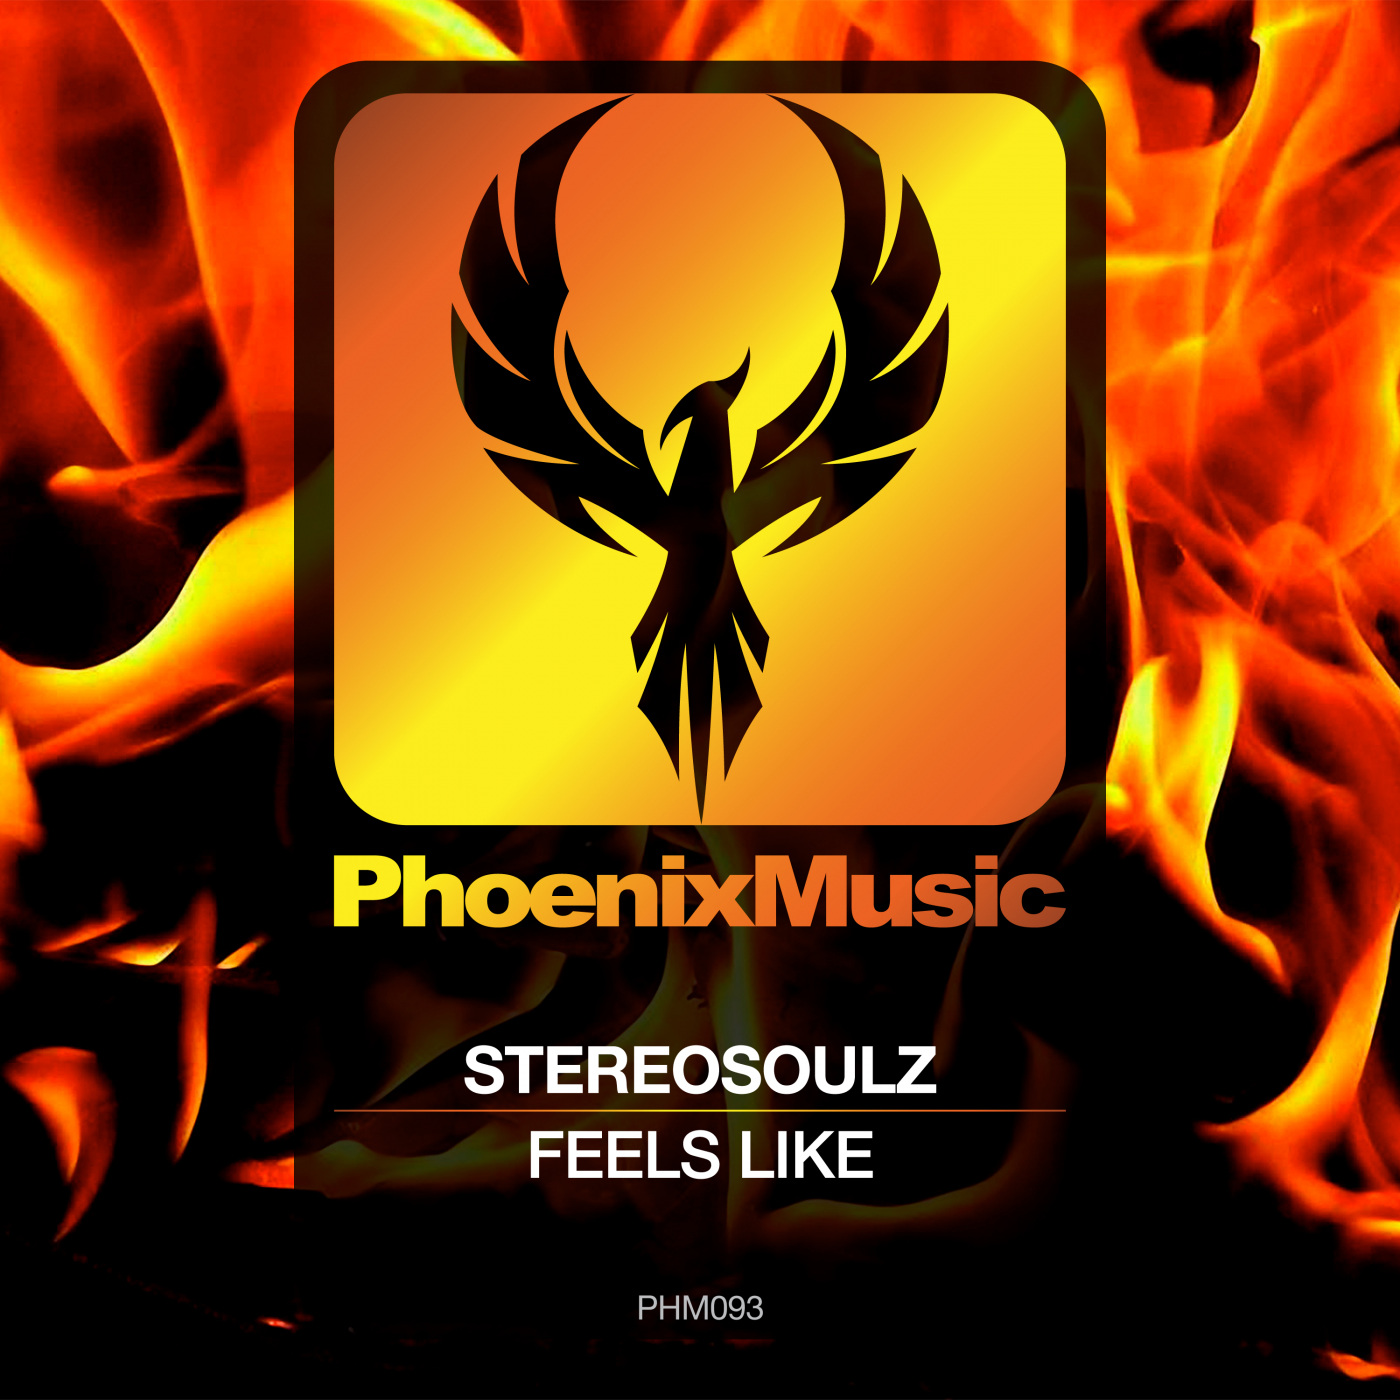 Stereosoulz - Feels Like / Phoenix Music